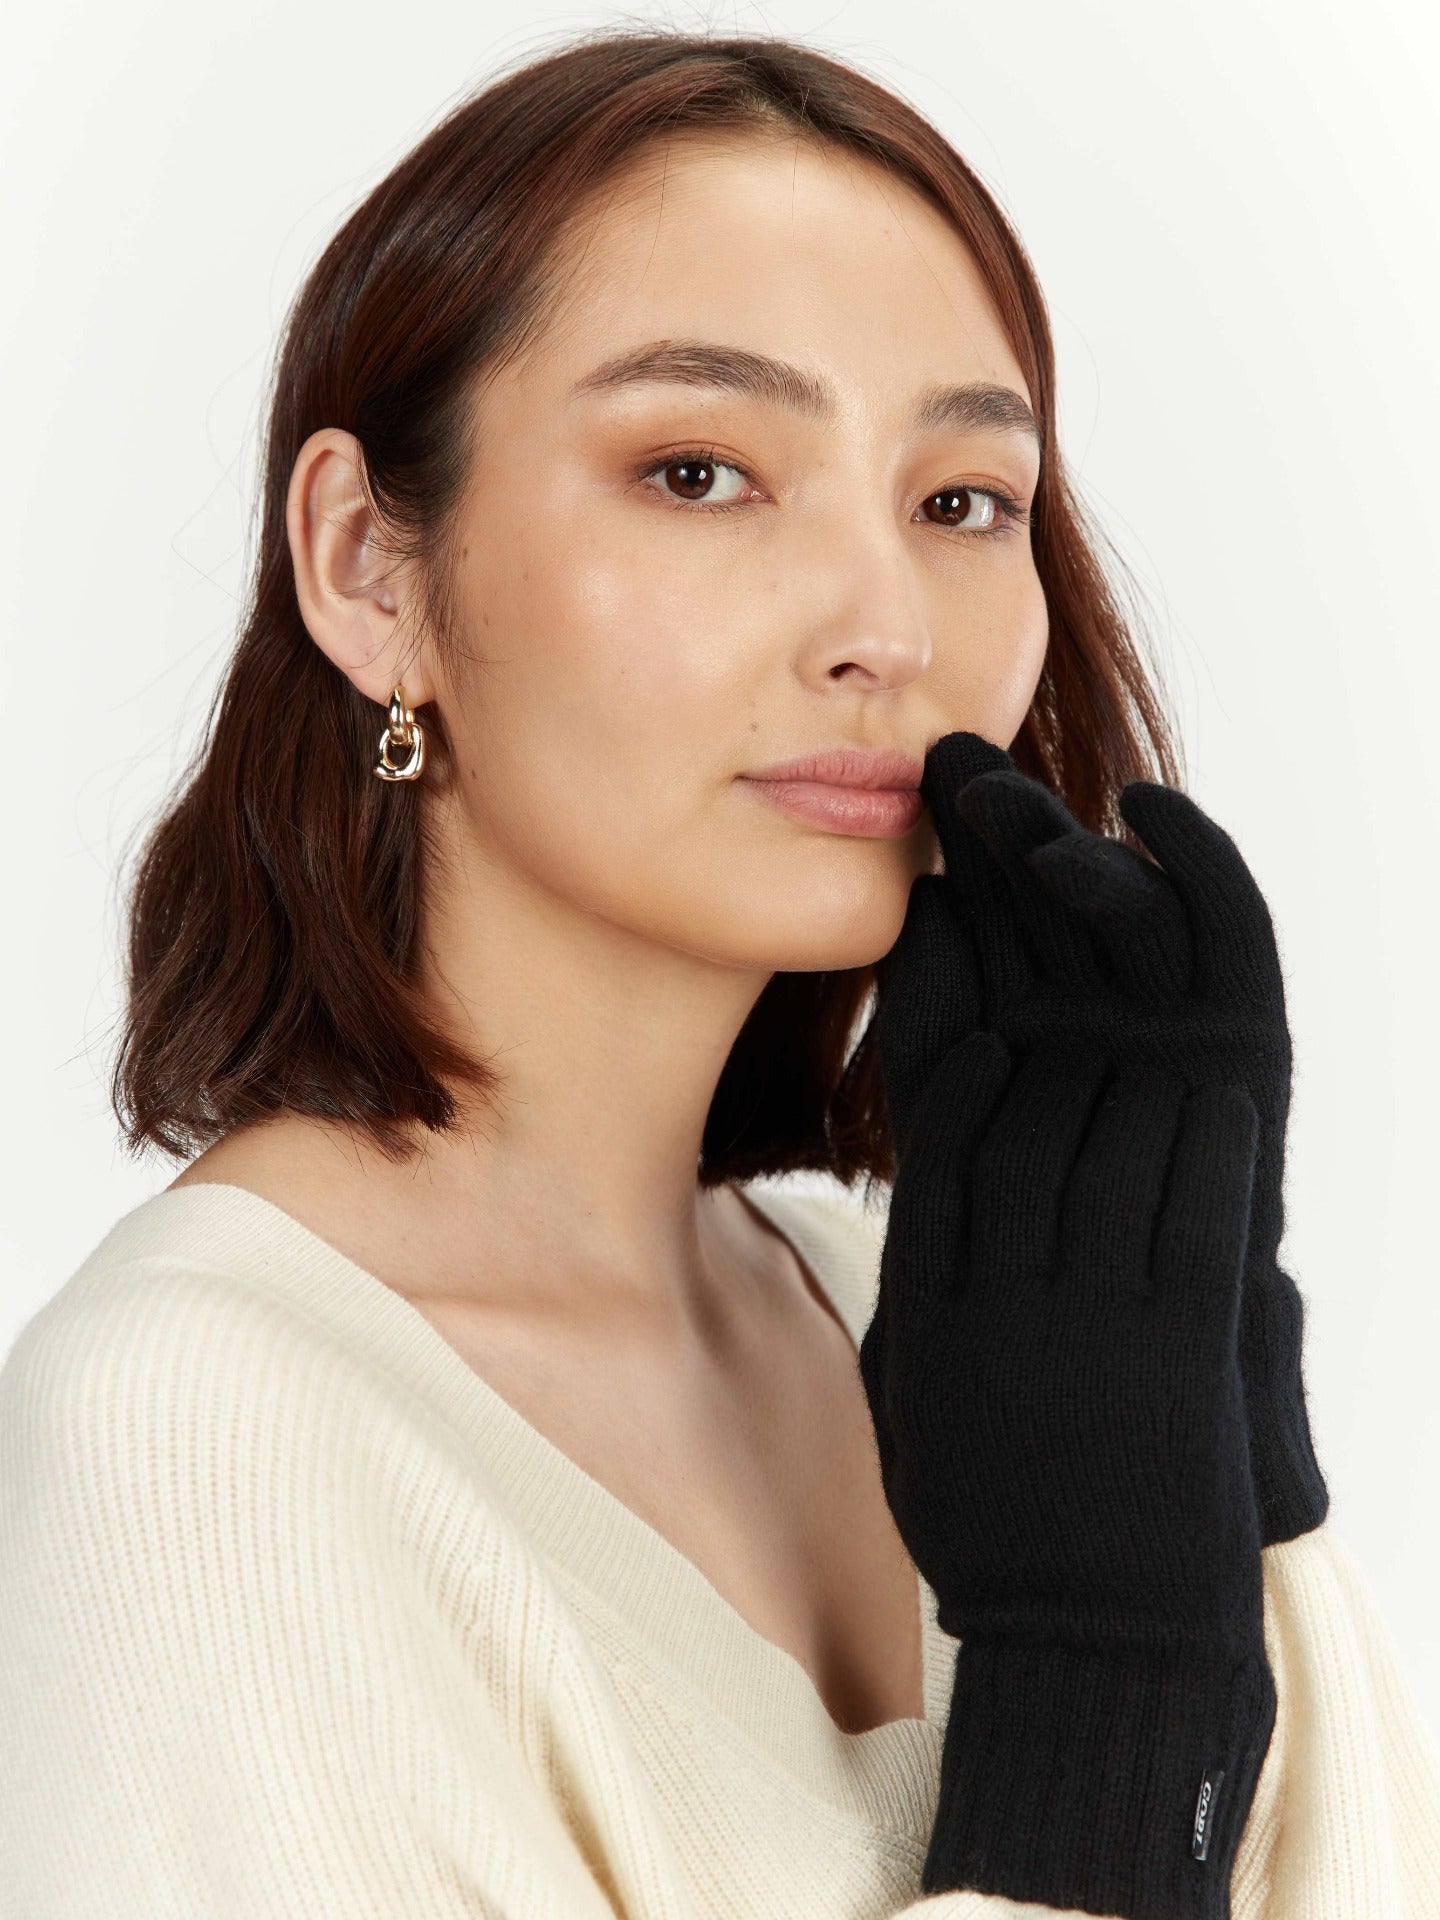 Women's Cashmere Short Gloves Black - Gobi Cashmere